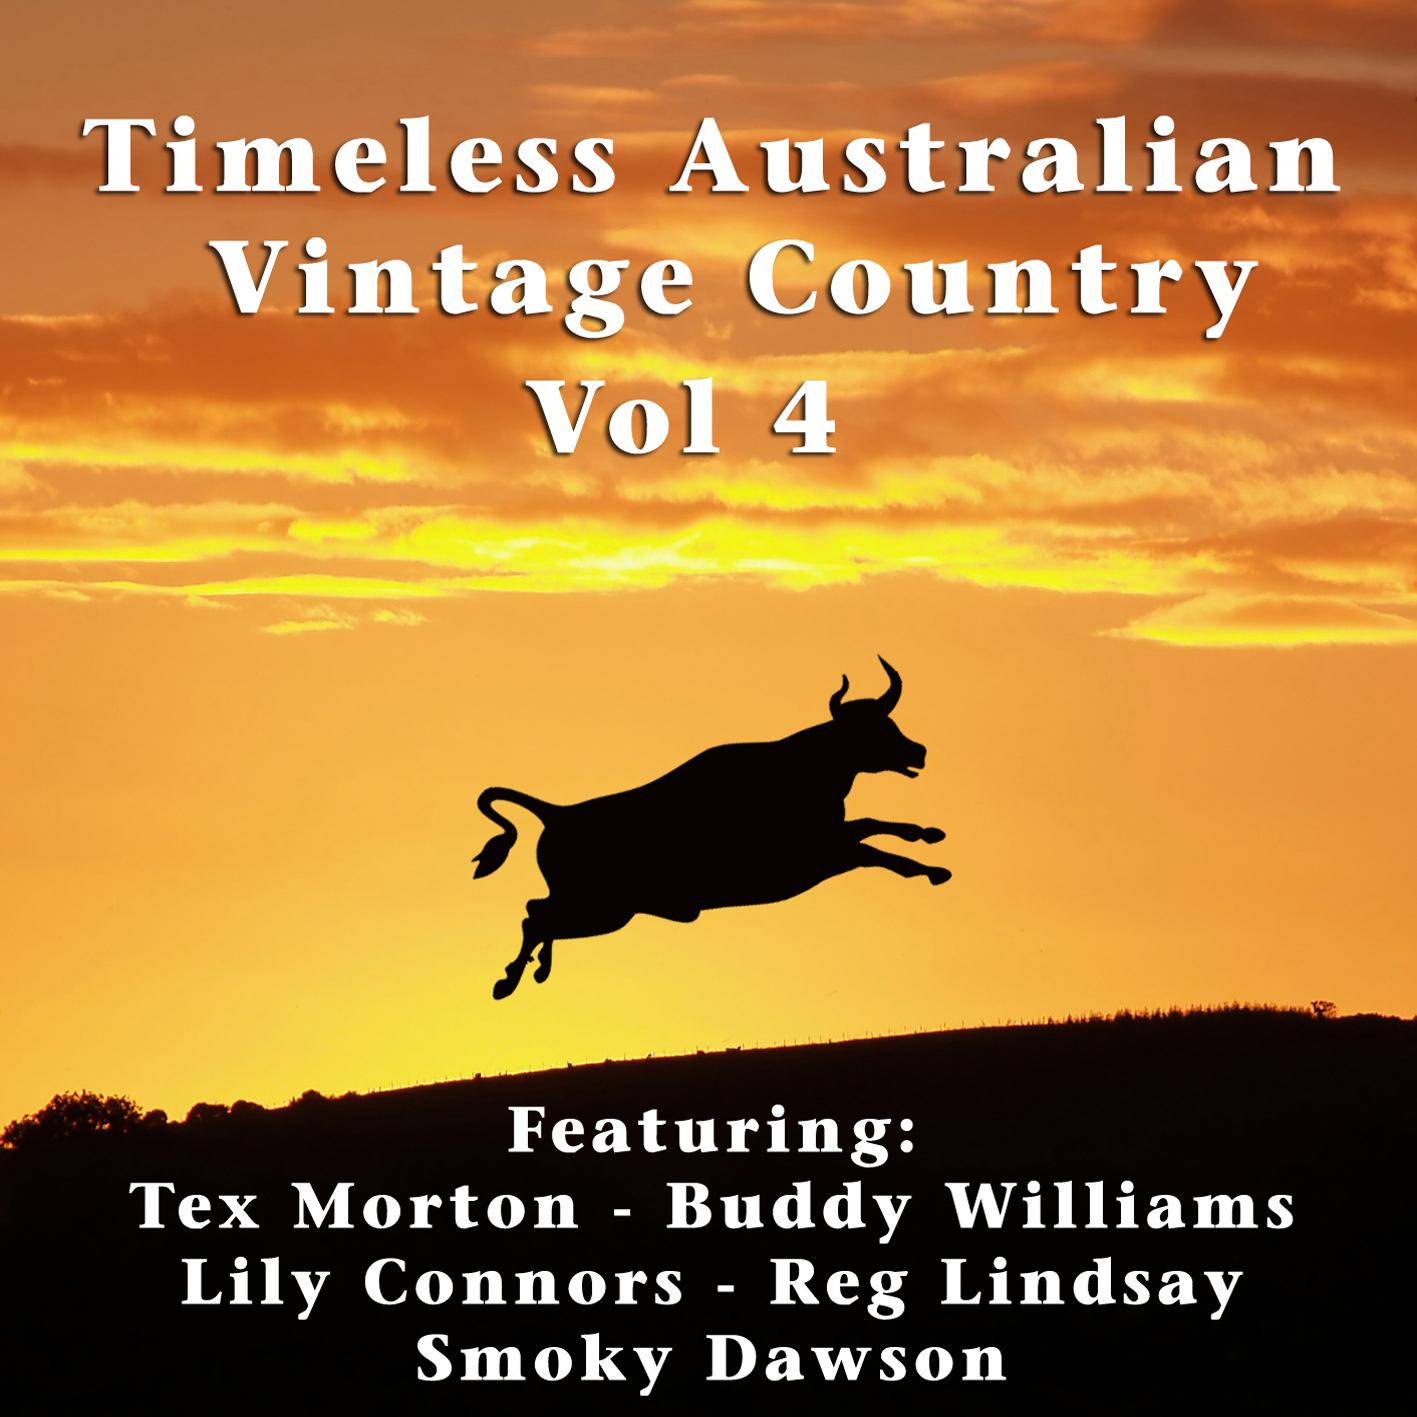 Timeless Australian Vintage Country Vol 4